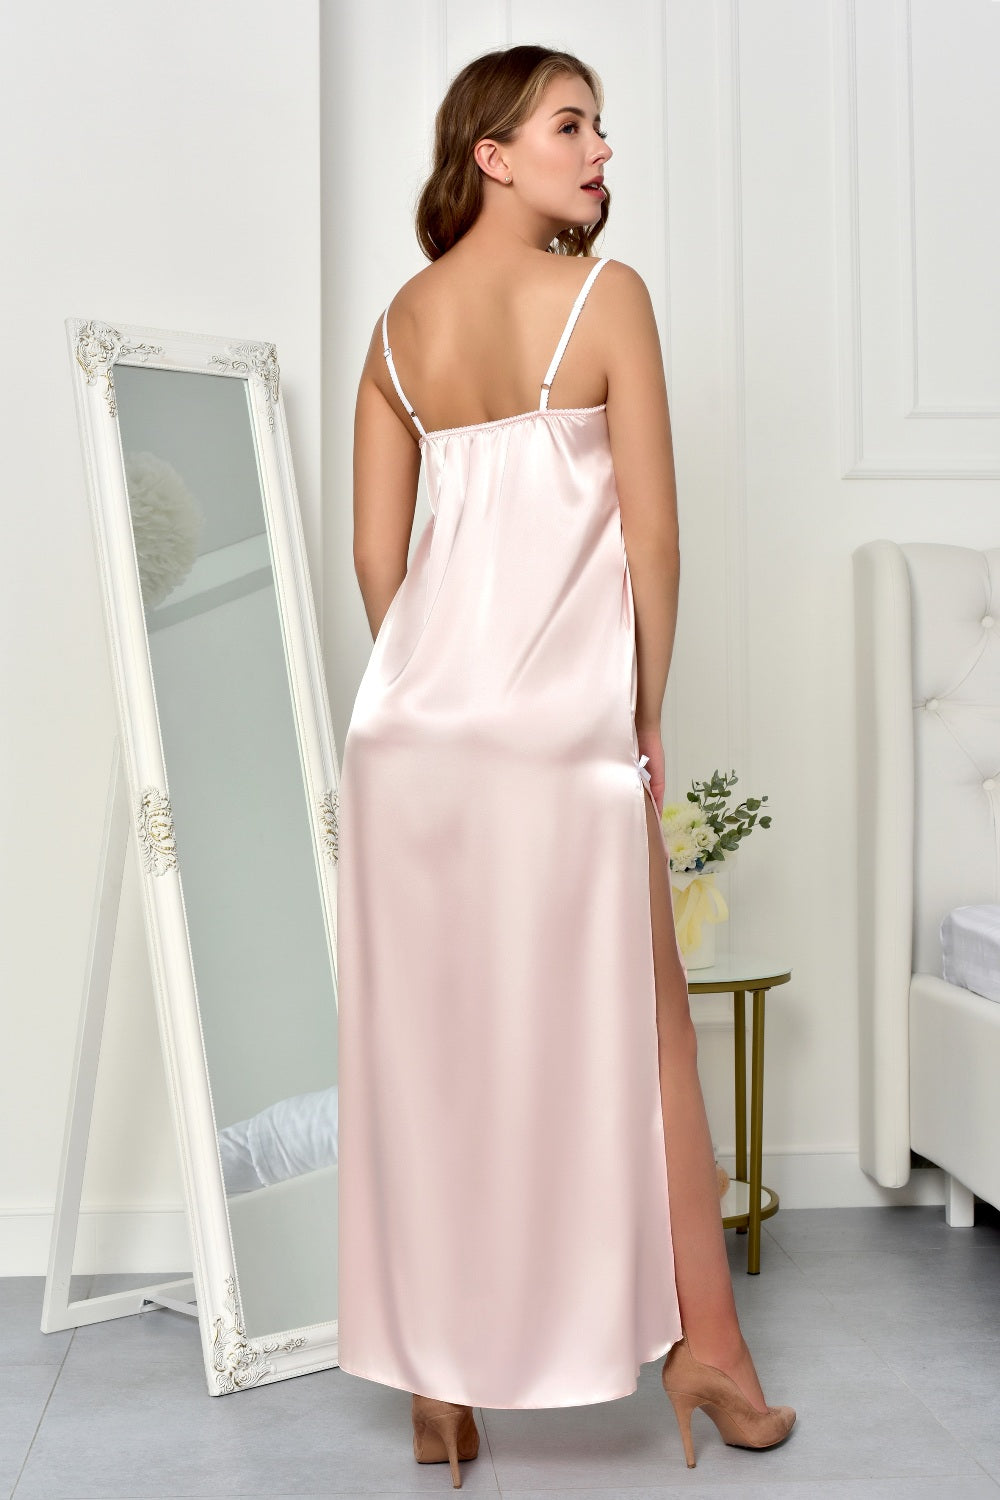 Handmade Light Pink Satin Nightdress with Side Slits